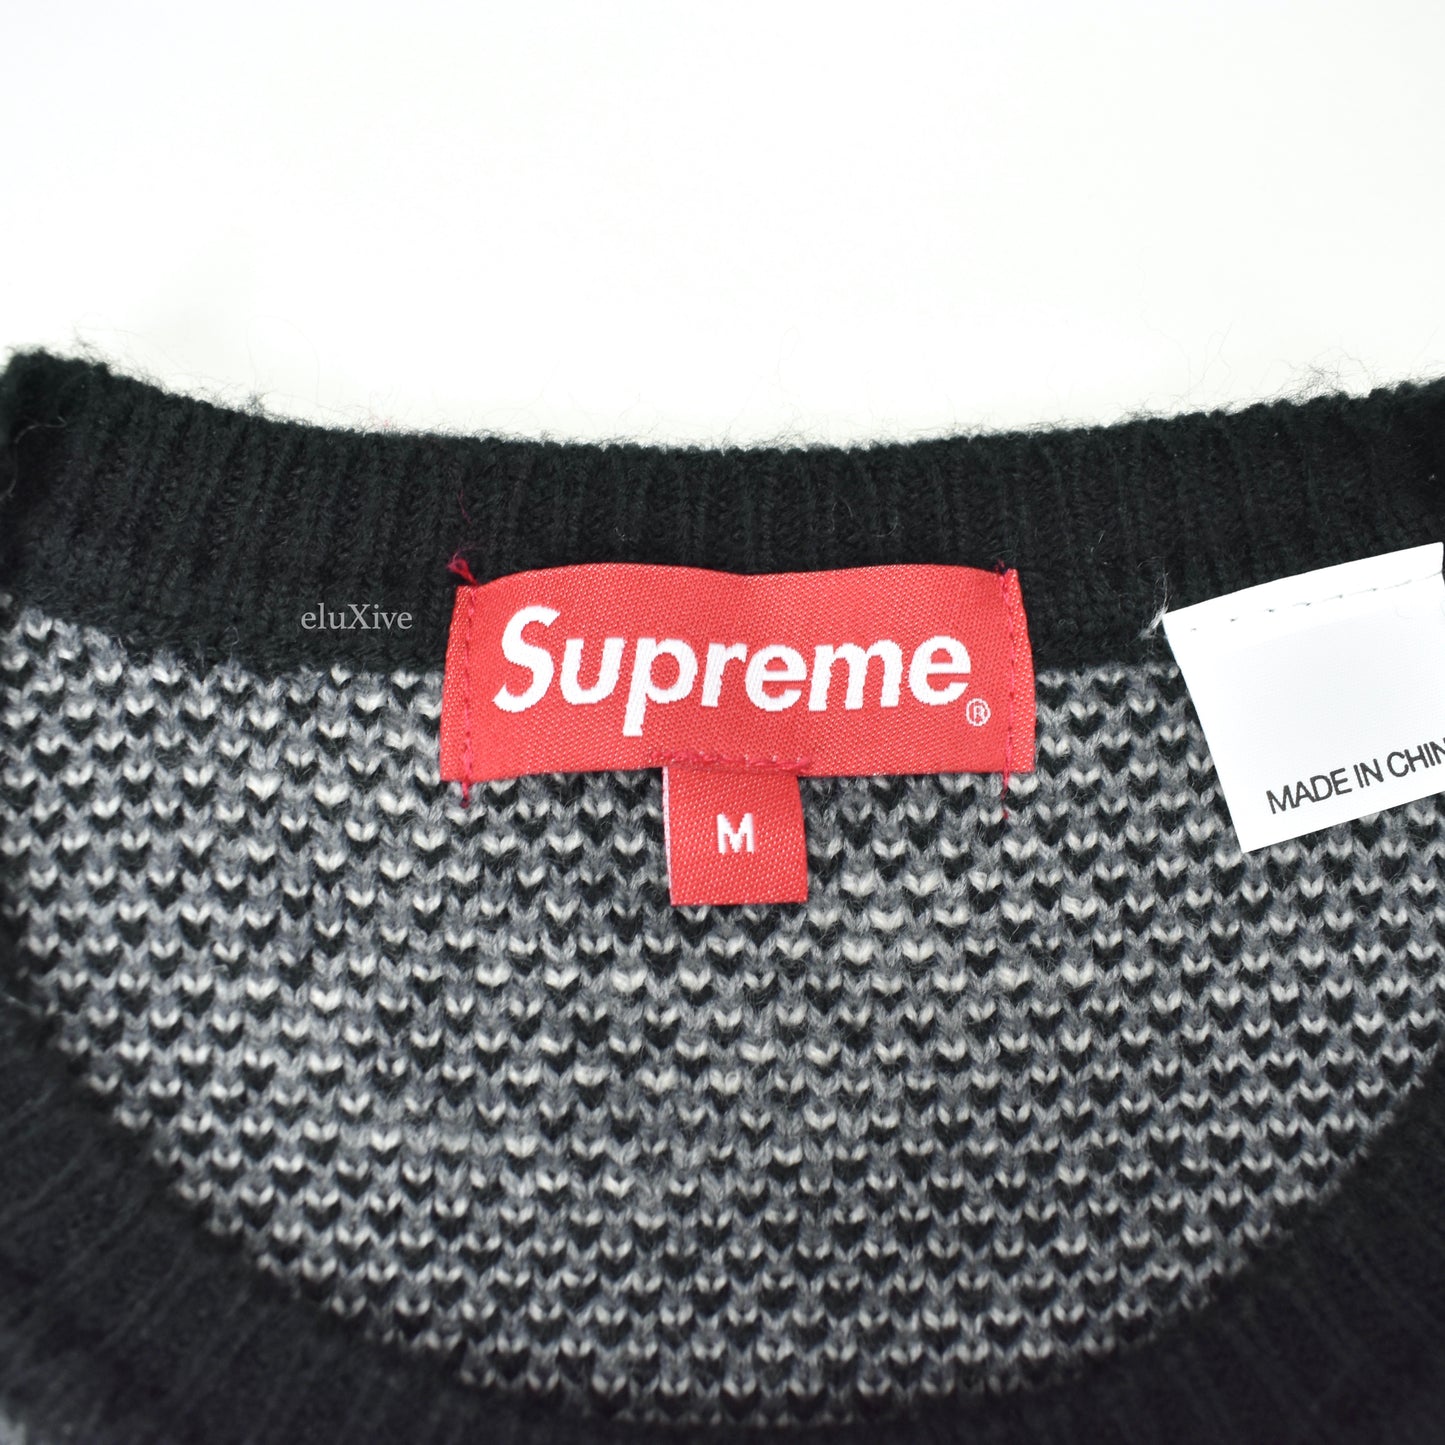 Supreme - Black Dice Jacquard Knit Sweater